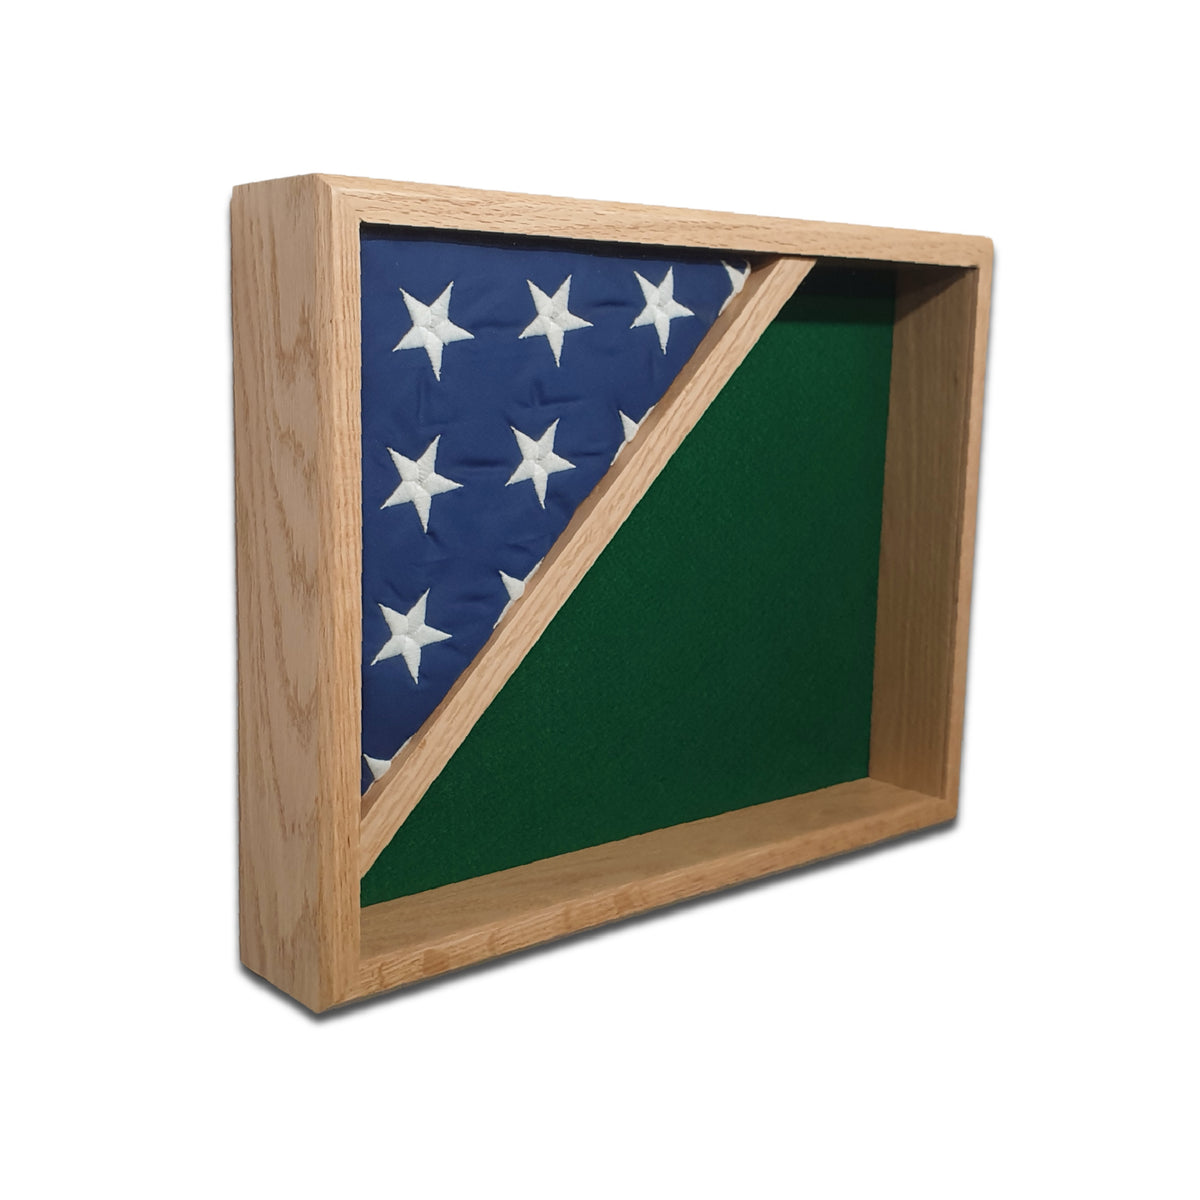 Oak hardwood 14"x18" Shadow box with green felt backer, and 3'x5' folded flag.